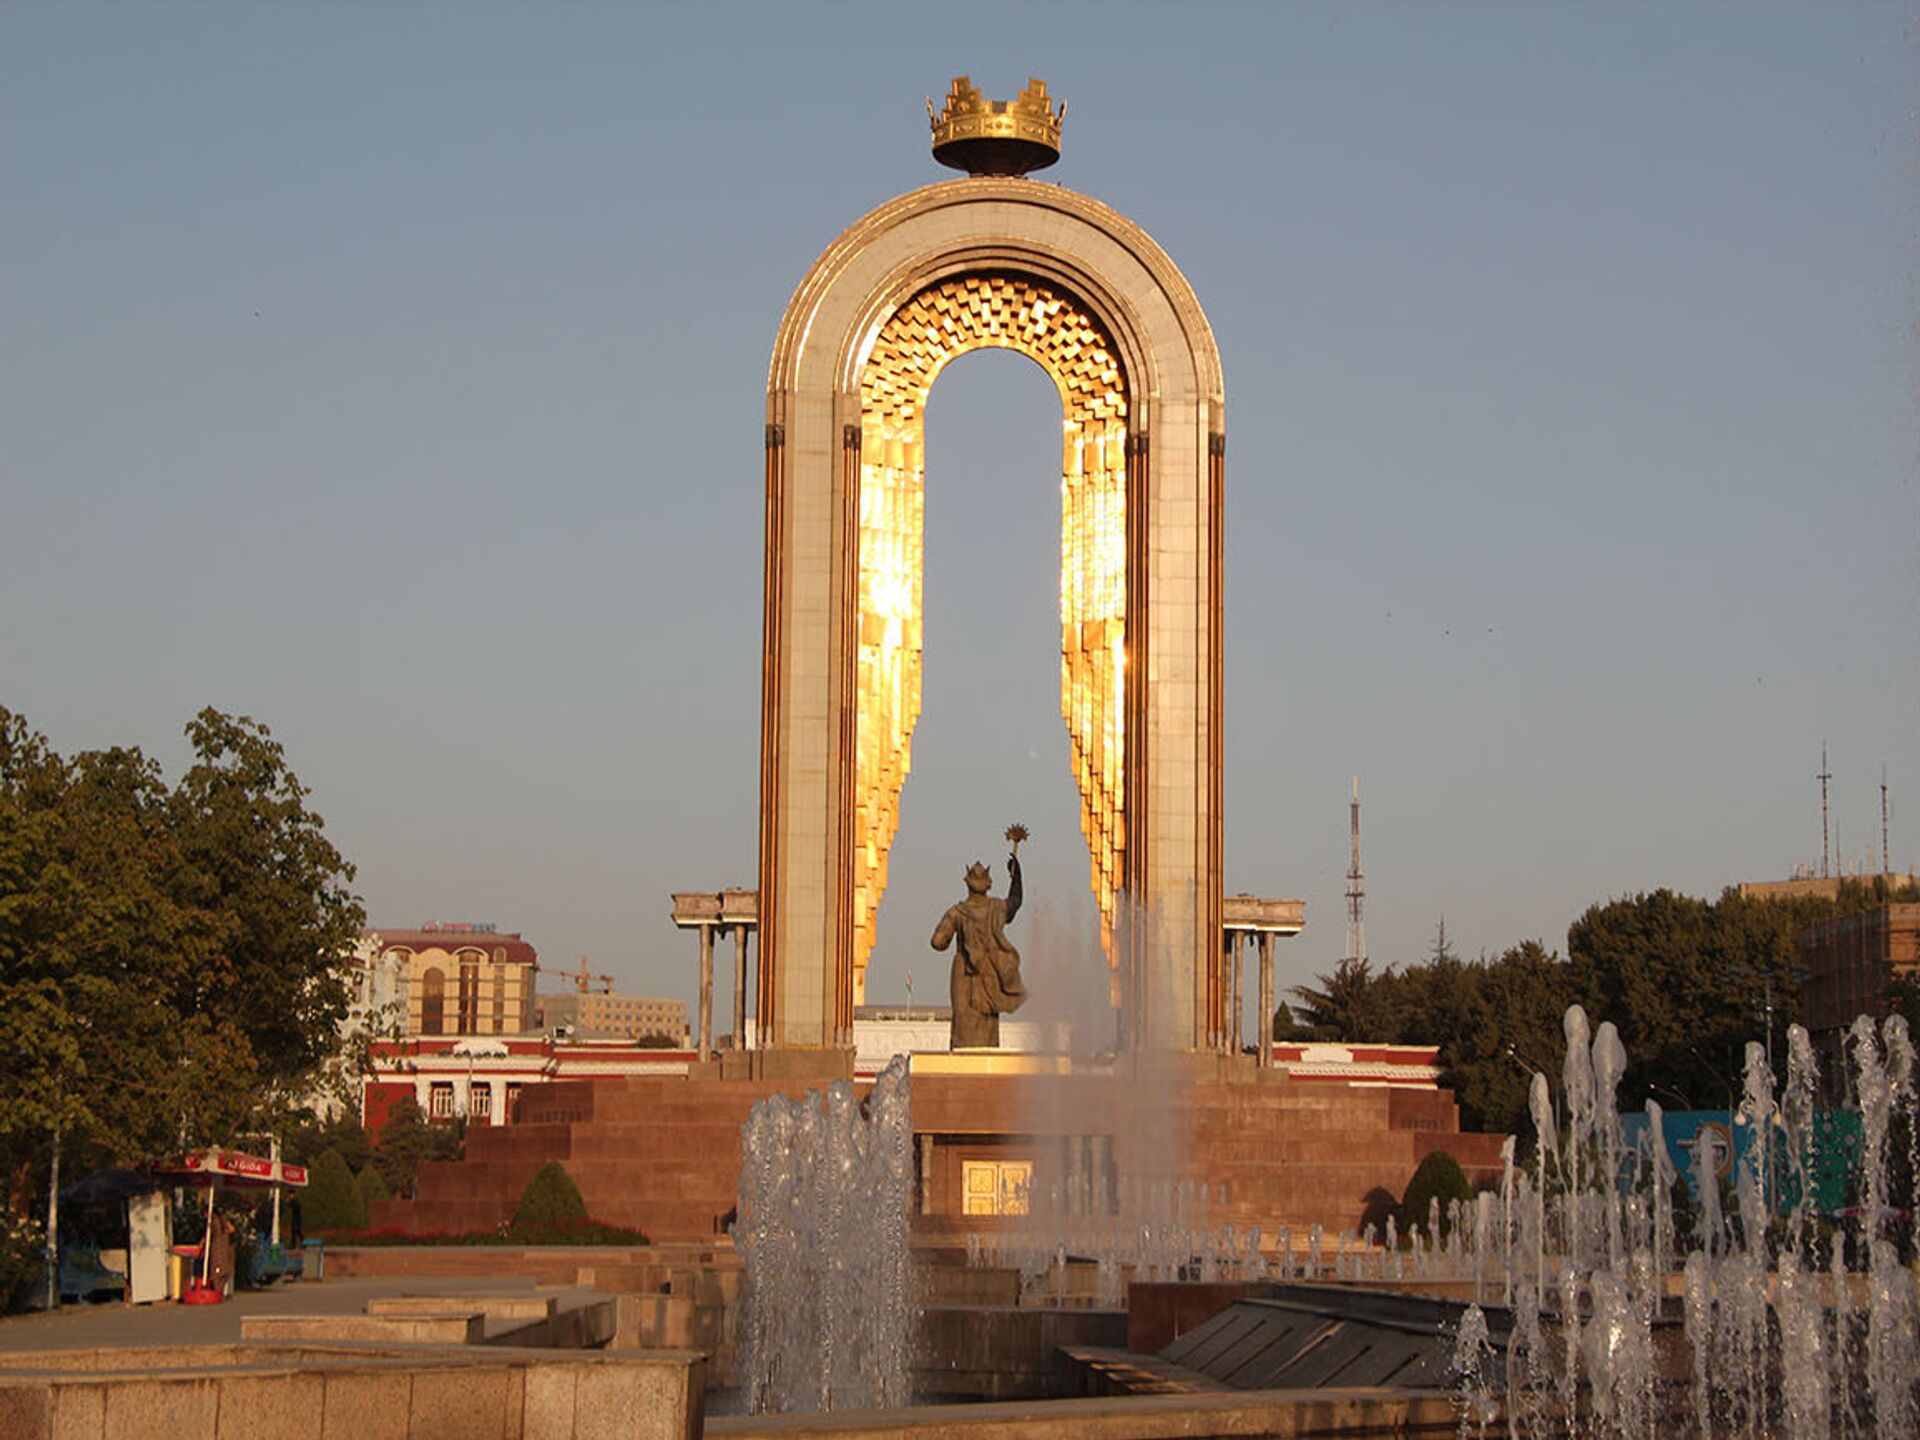 Таджикистан какое государство. Таджикистан памятник Исмаилу Самани в Душанбе. Таджикистан статуя Исмаила Самани. Парк Исмаила Самани в Таджикистане.